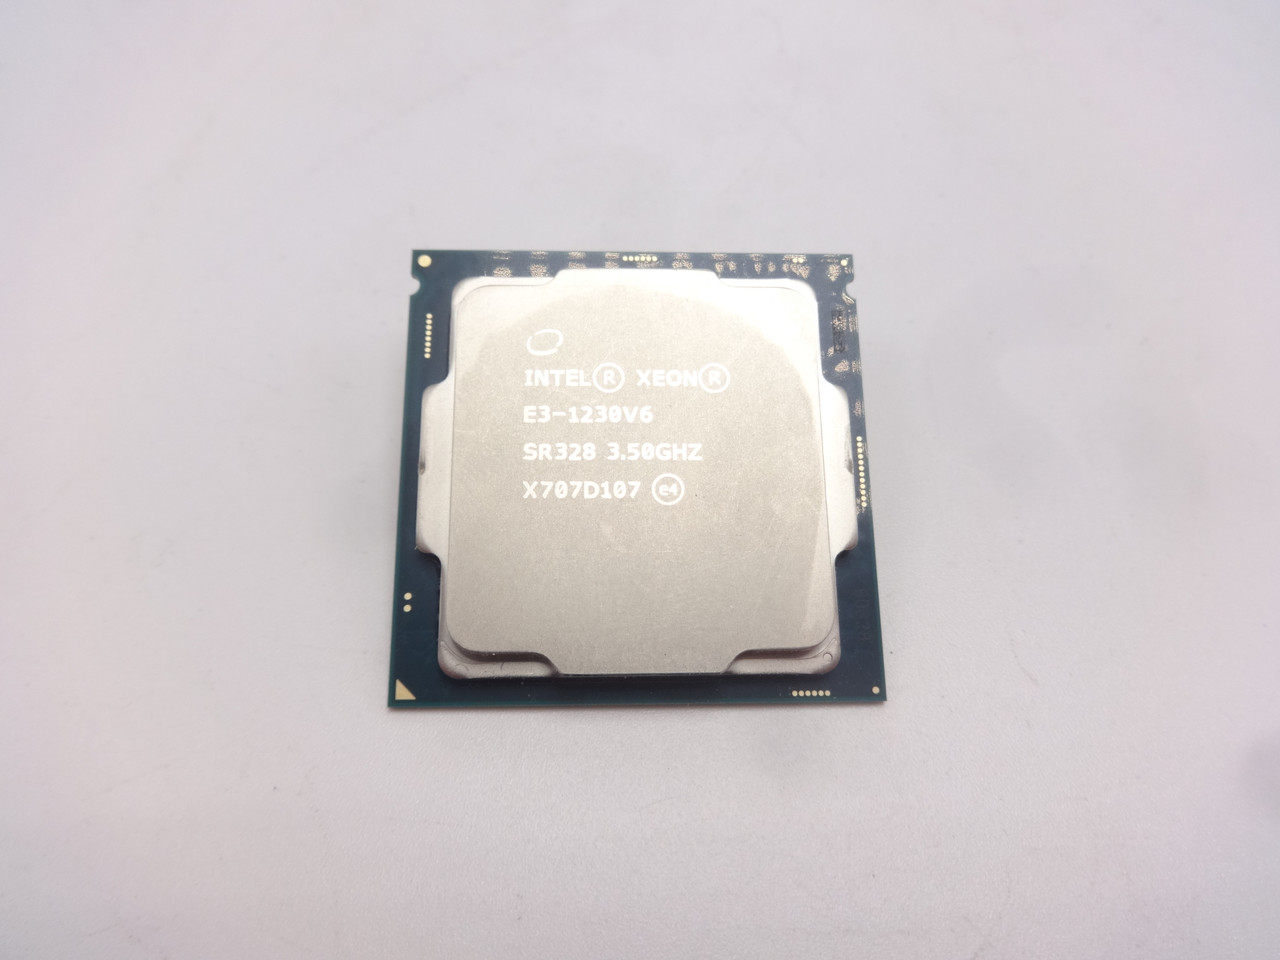 Intel Xeon SR328 E3-1230 V6 3.5GHZ 8M QC Processor